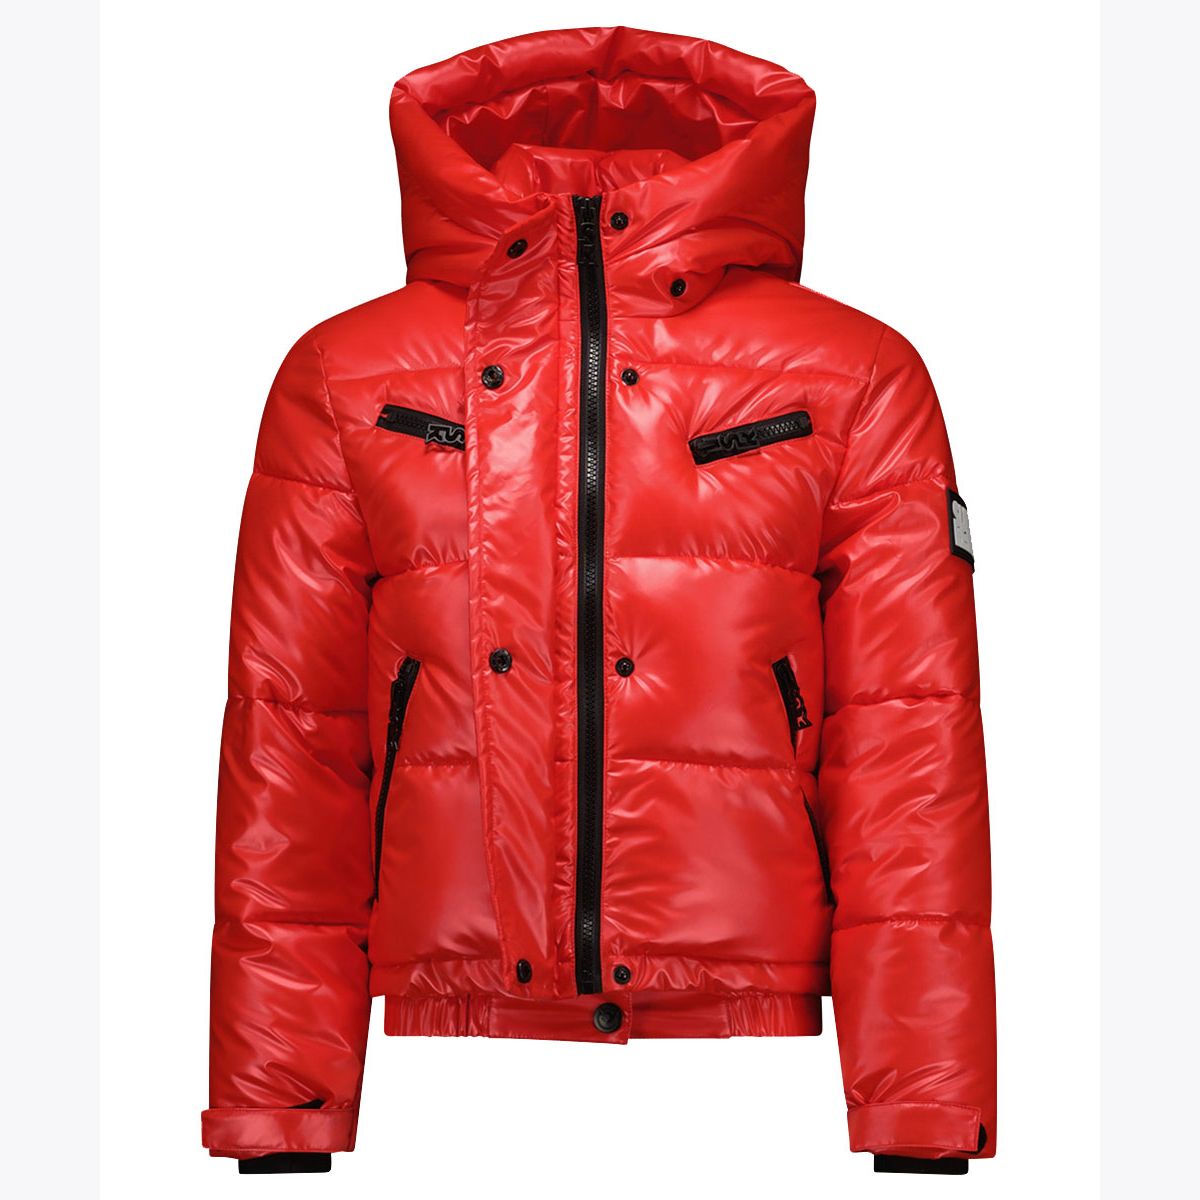  Ski & Snow Jackets -  superrebel SPICY Ski Jacket R309-5214